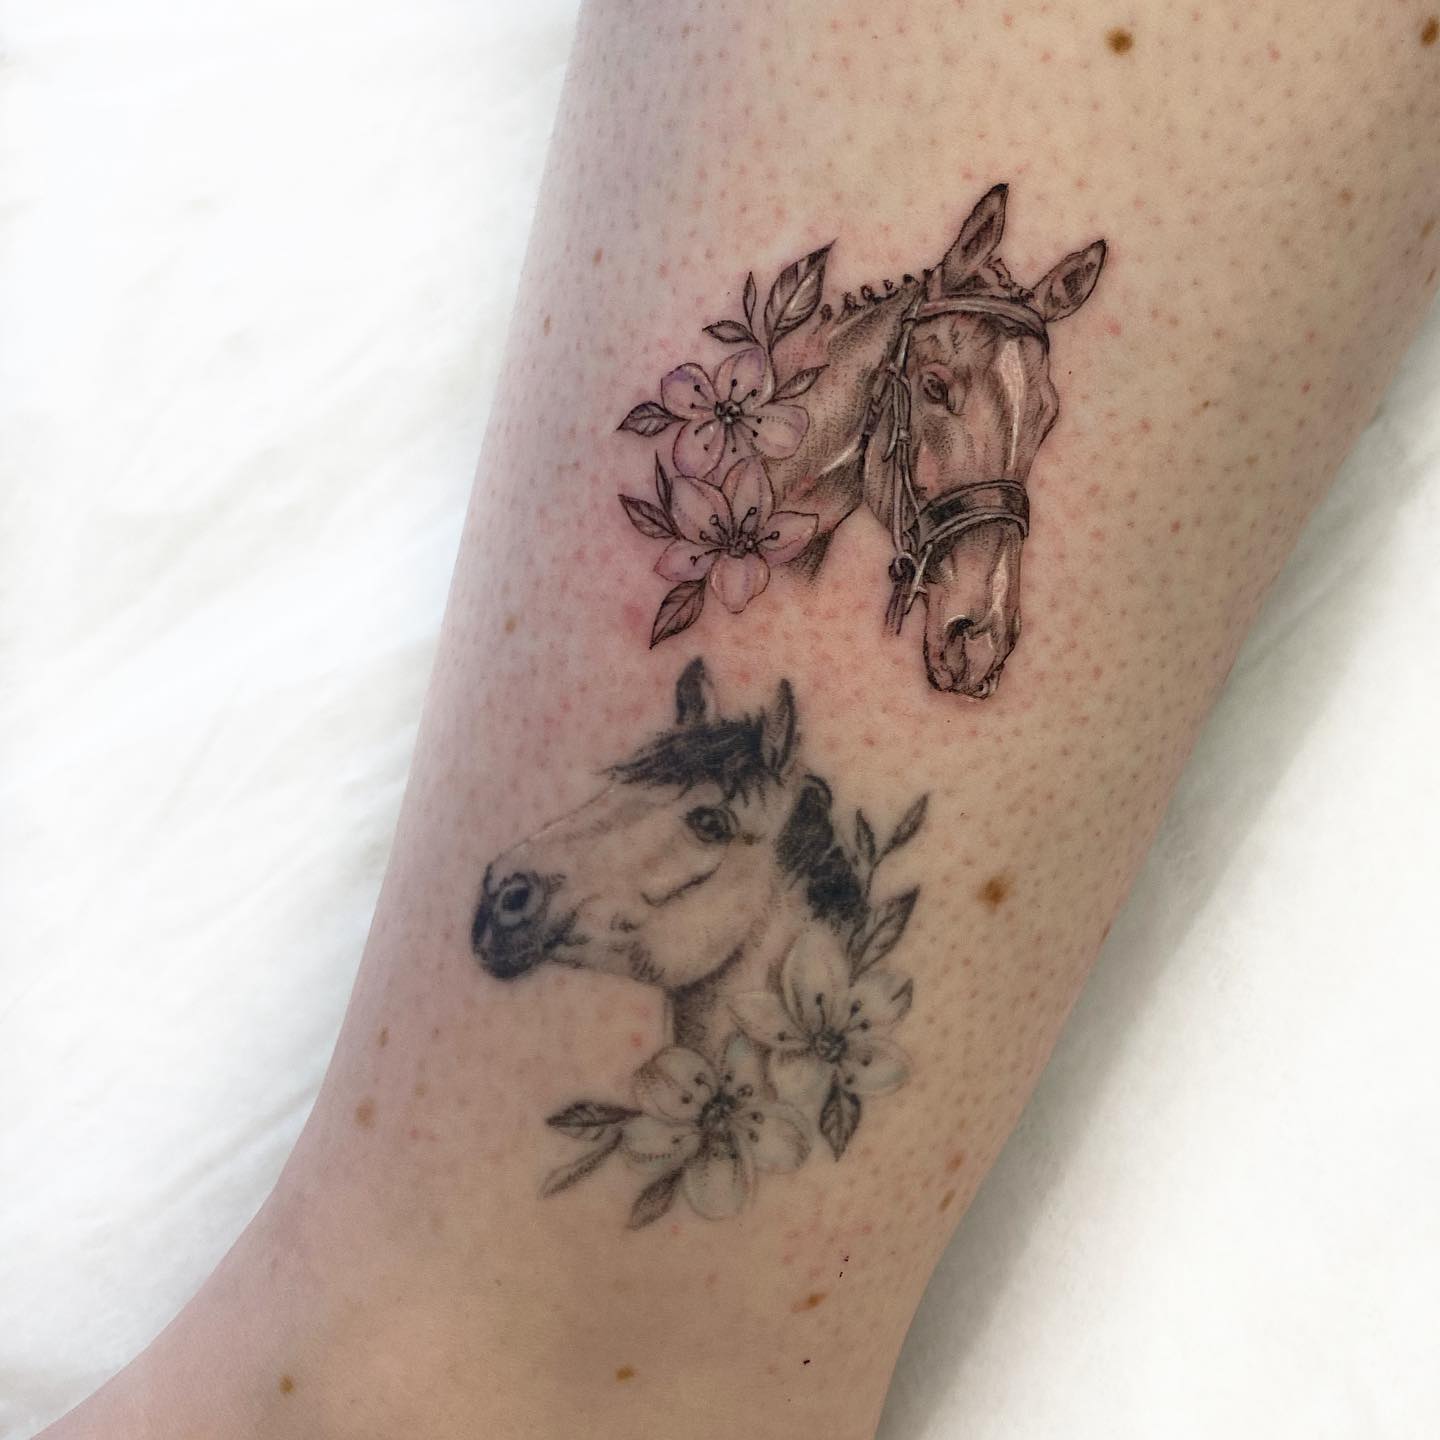 Tatuaje de dos caballos corriendo 1